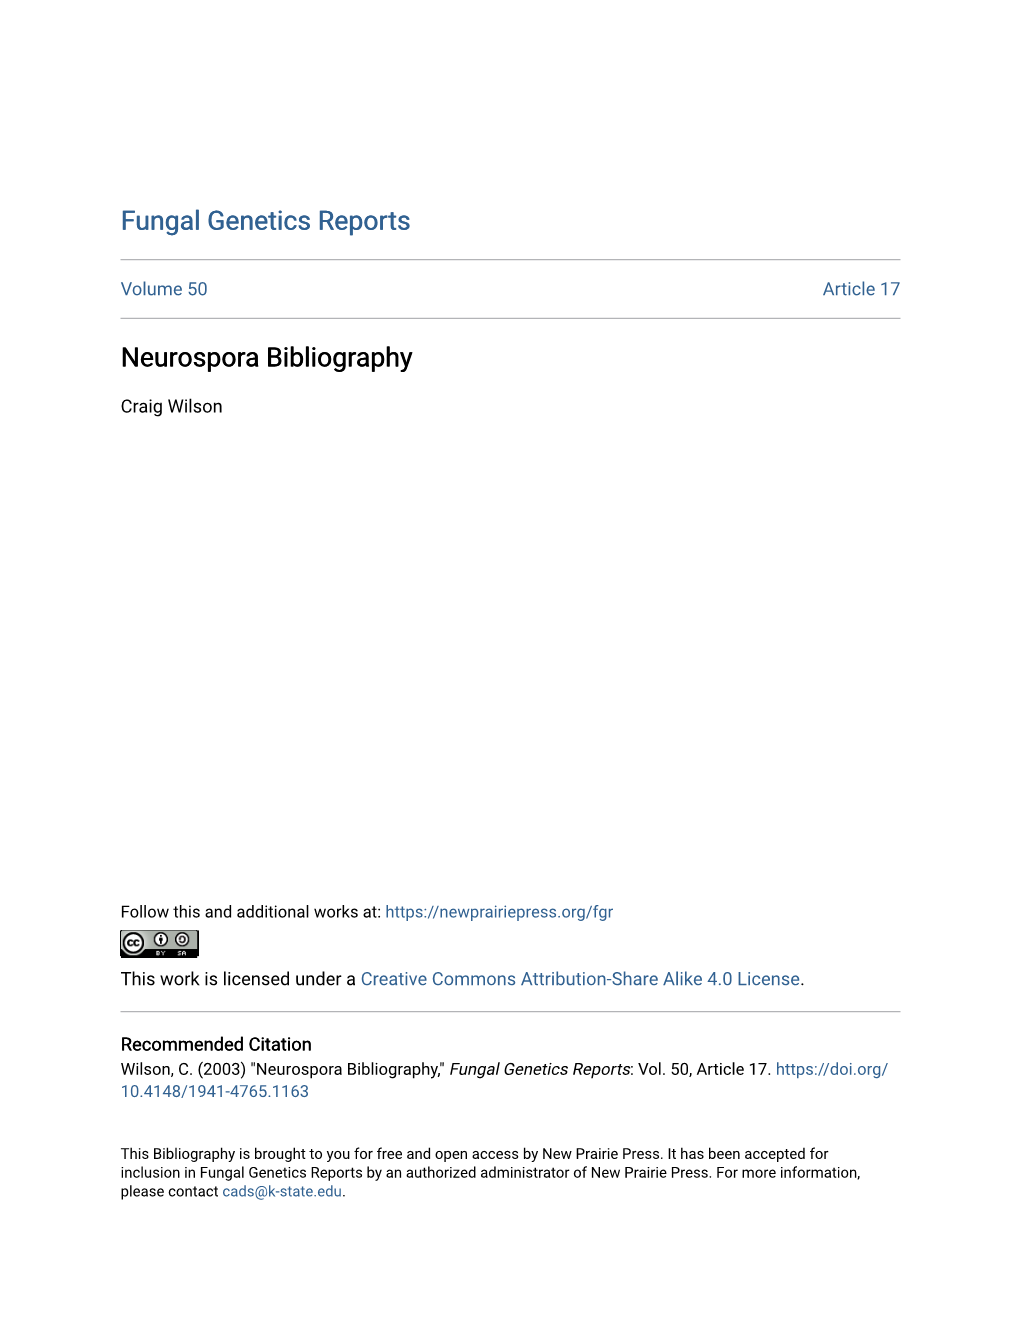 Neurospora Bibliography